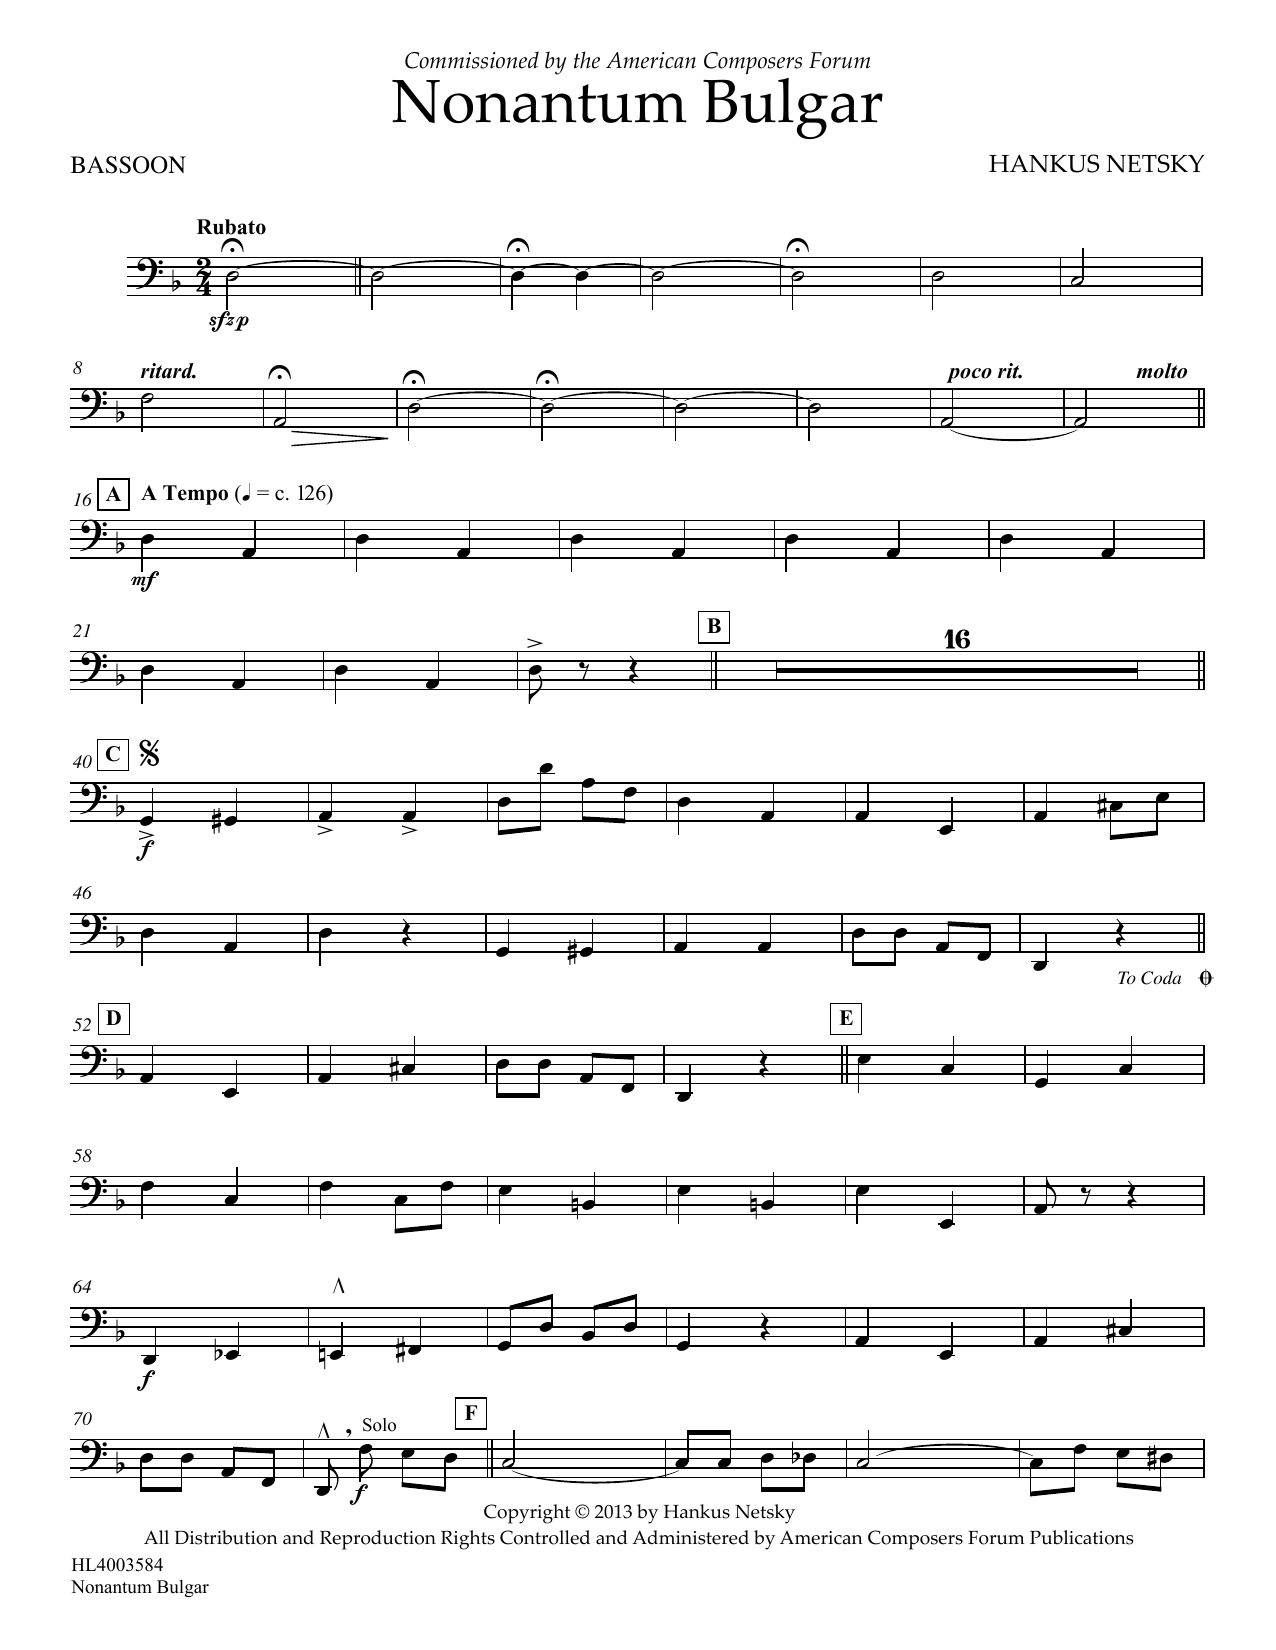 Hankus Netsky Nonantum Bulgar - Bassoon Sheet Music Notes & Chords for Concert Band - Download or Print PDF